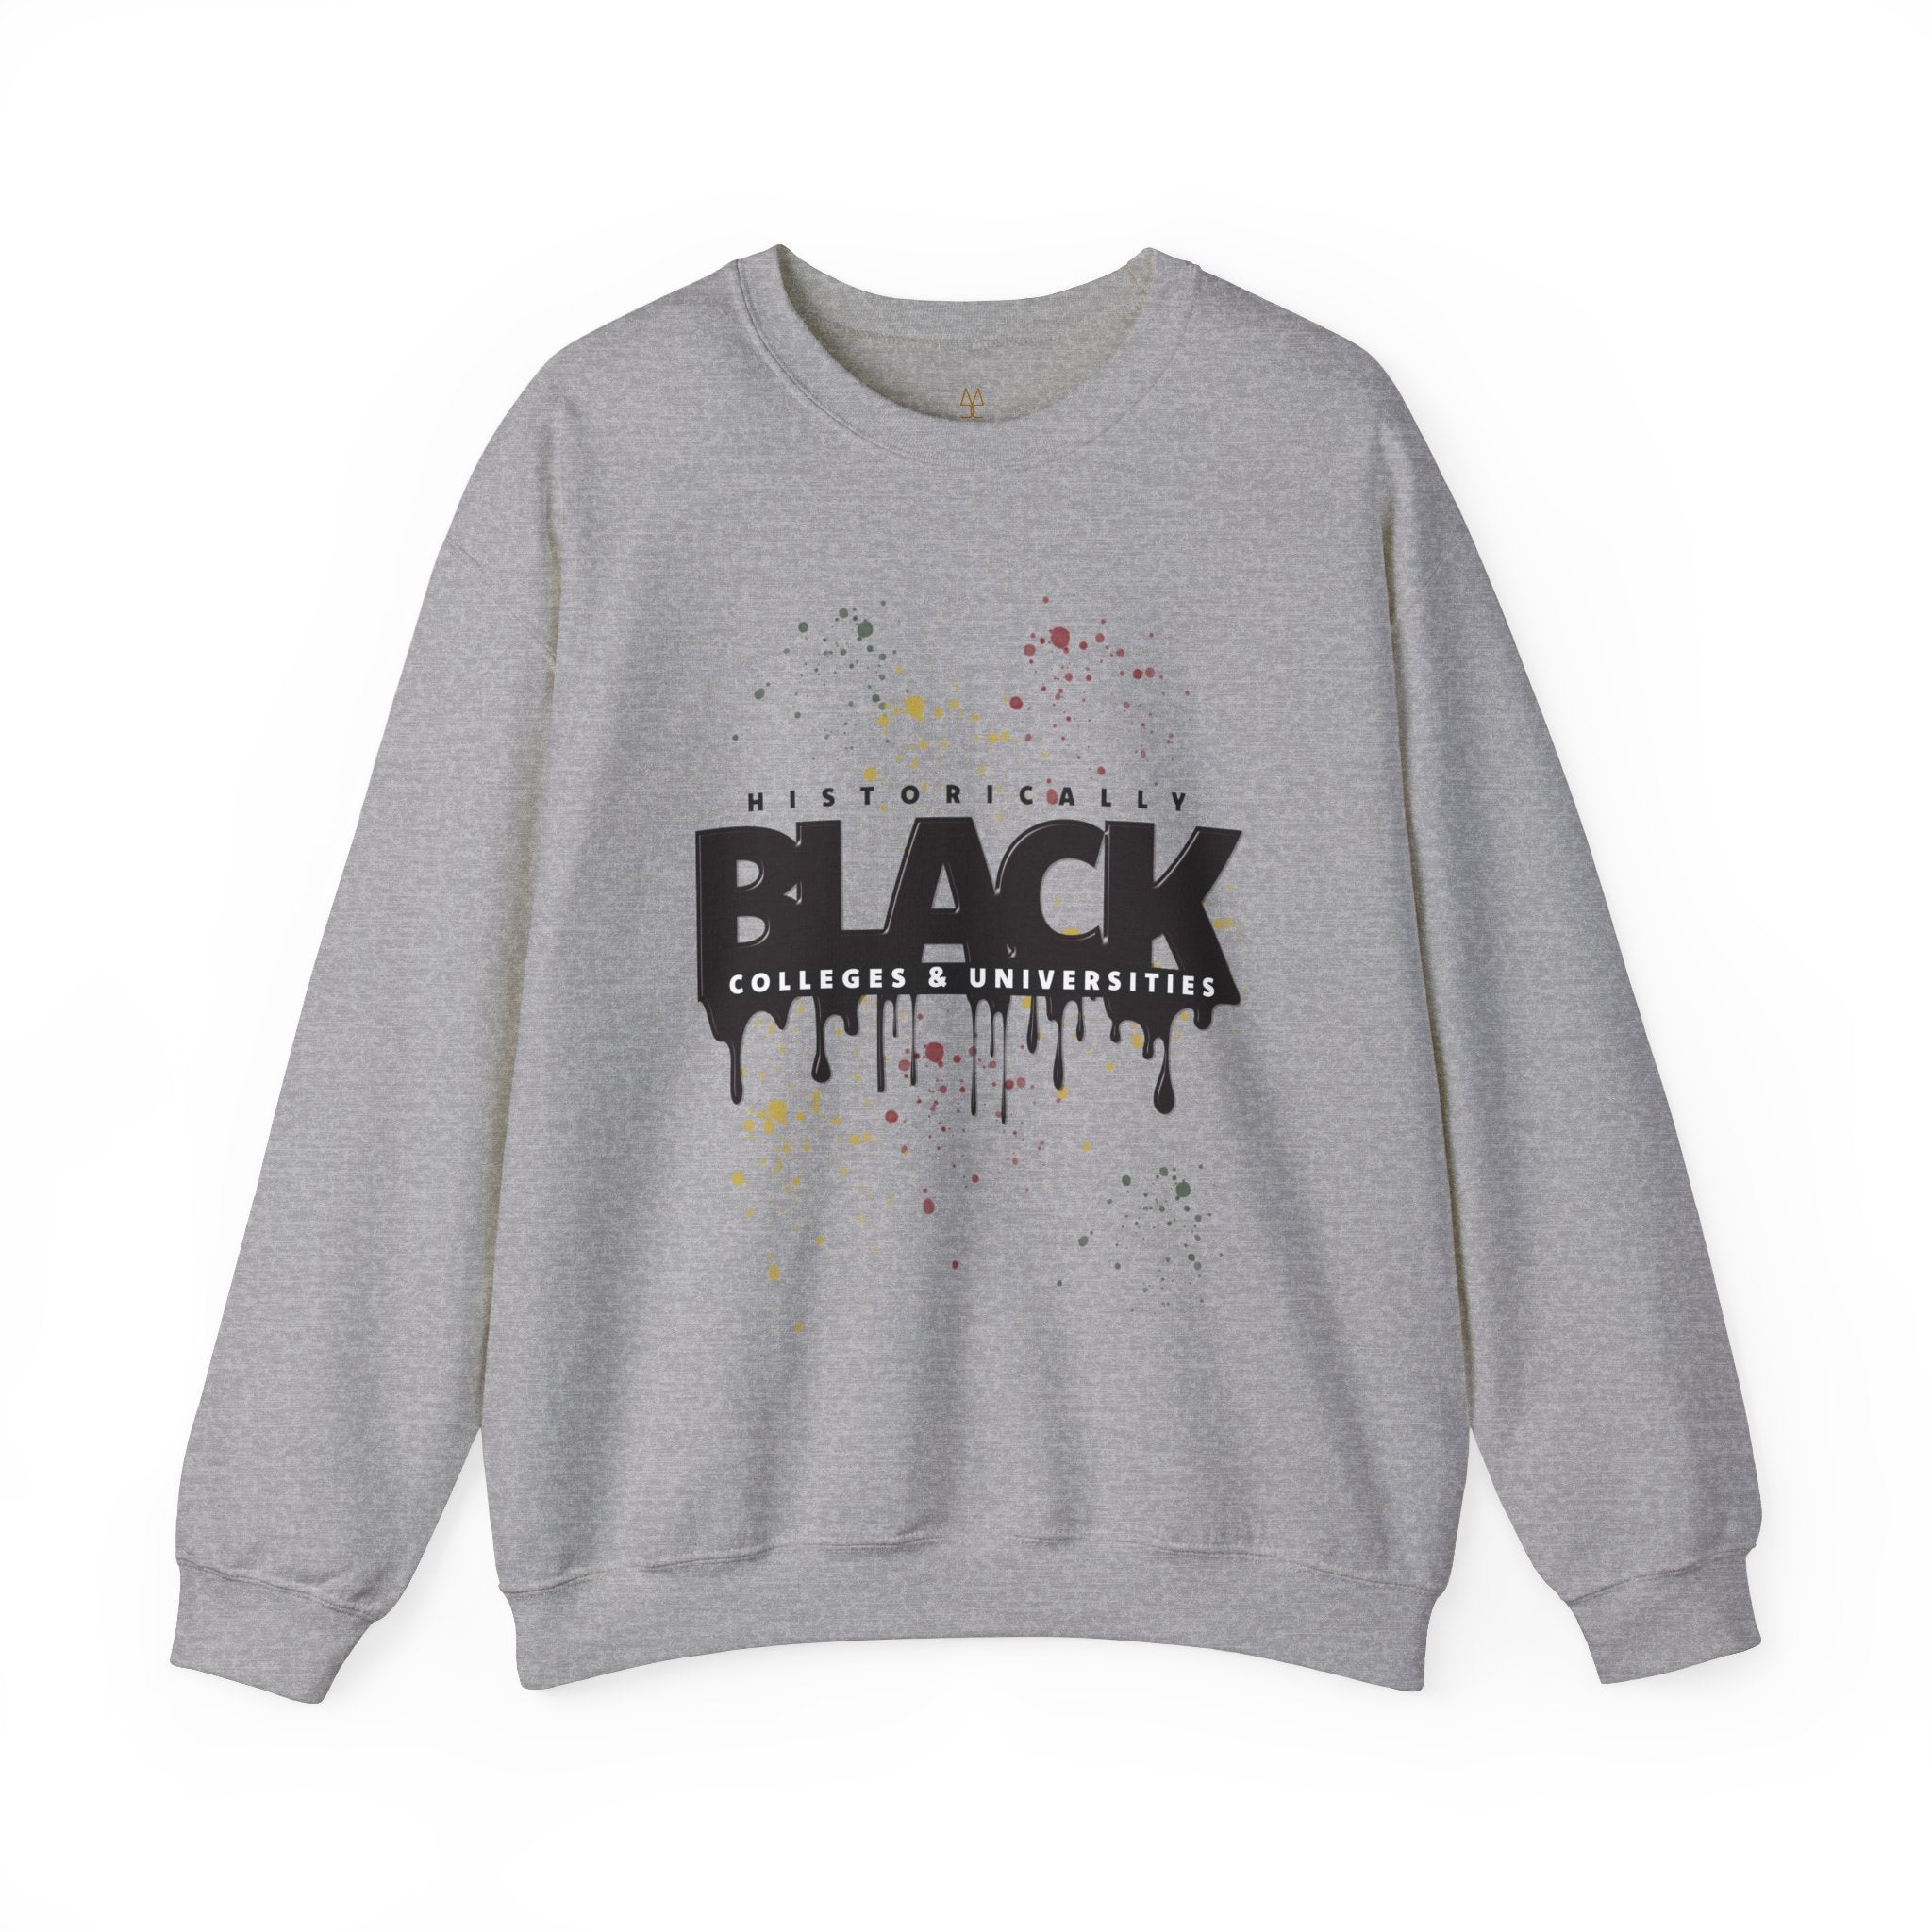 HBCU Black Pride Sweatshirt in sport grey.